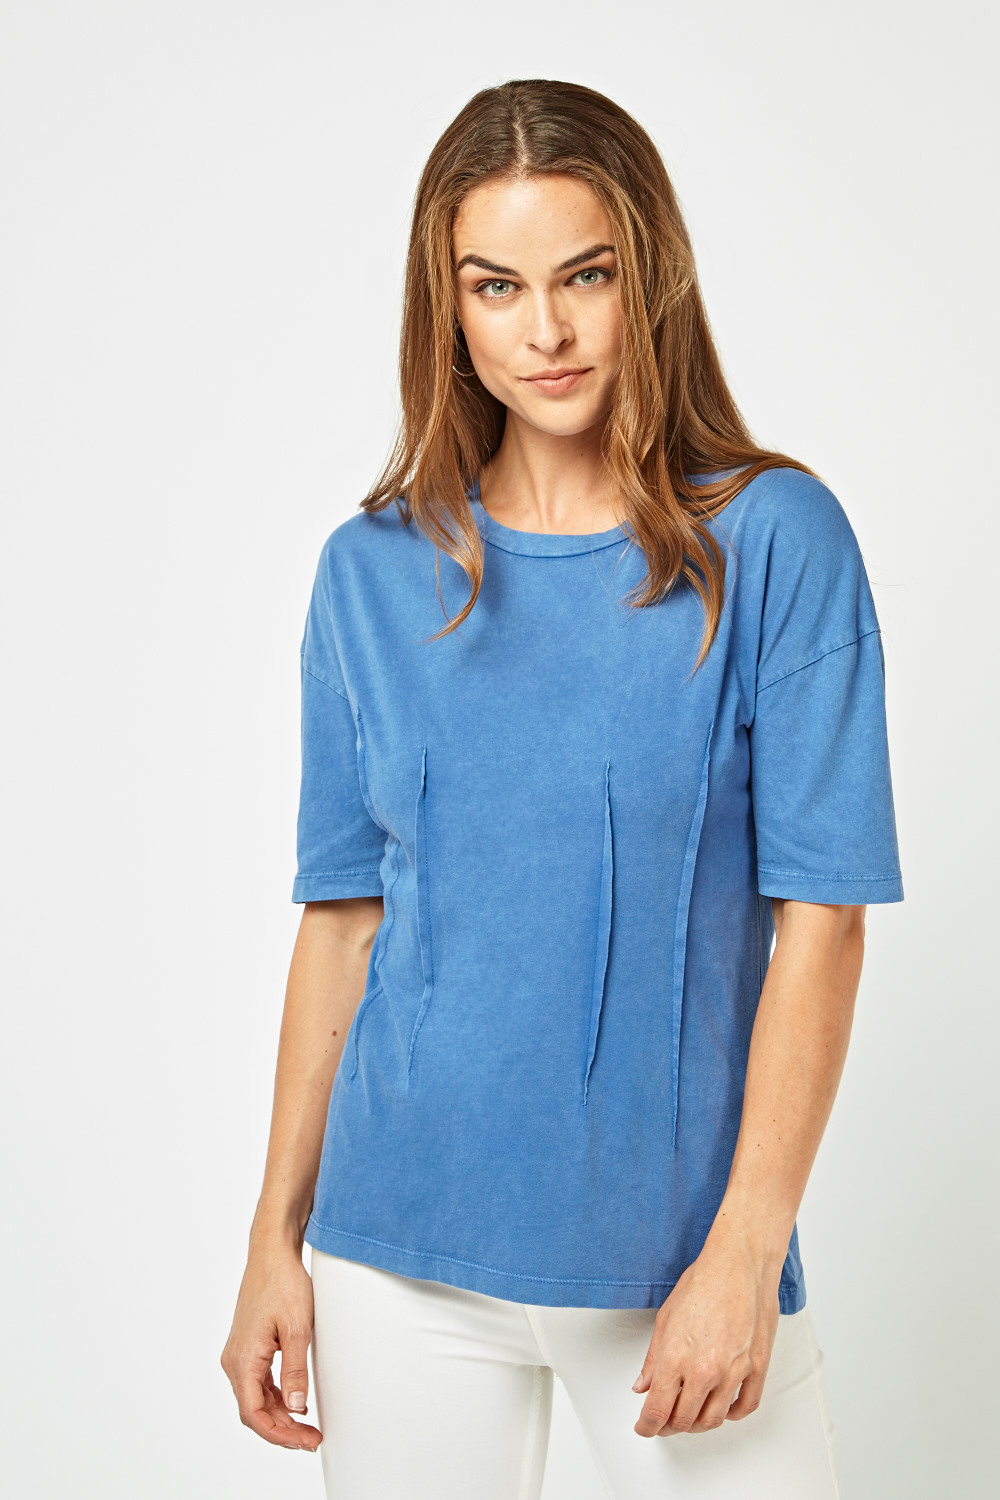 Plain Short Sleeve T-Shirt - Just $3